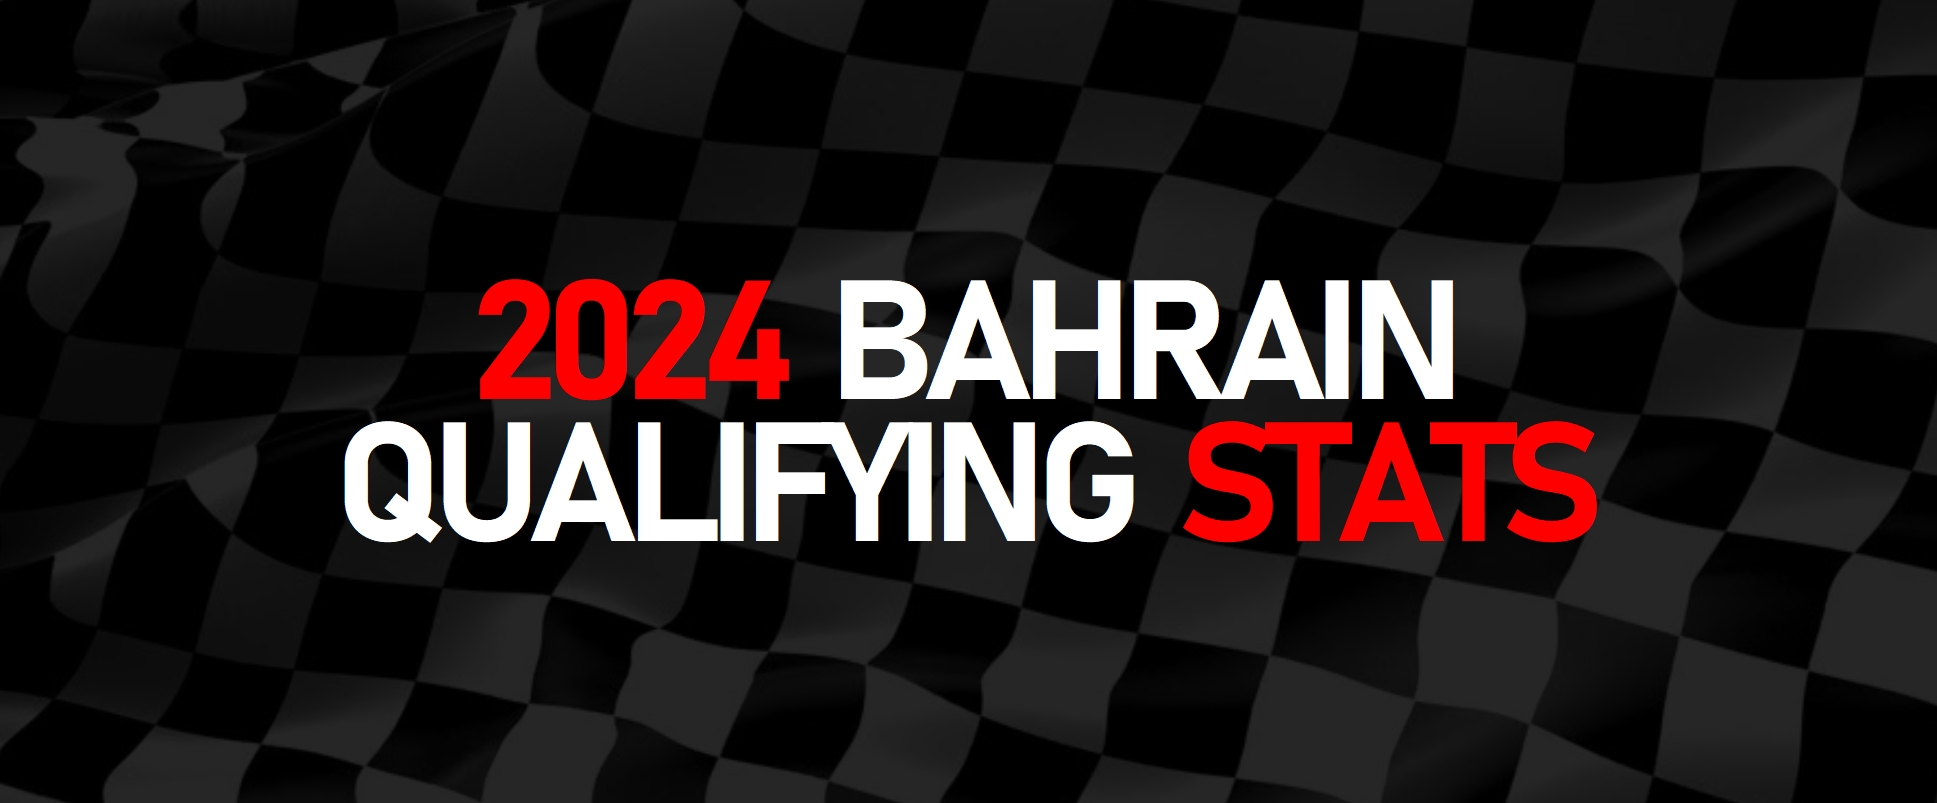 2024 Bahrain Grand Prix Qualifying Statistics Lights Out